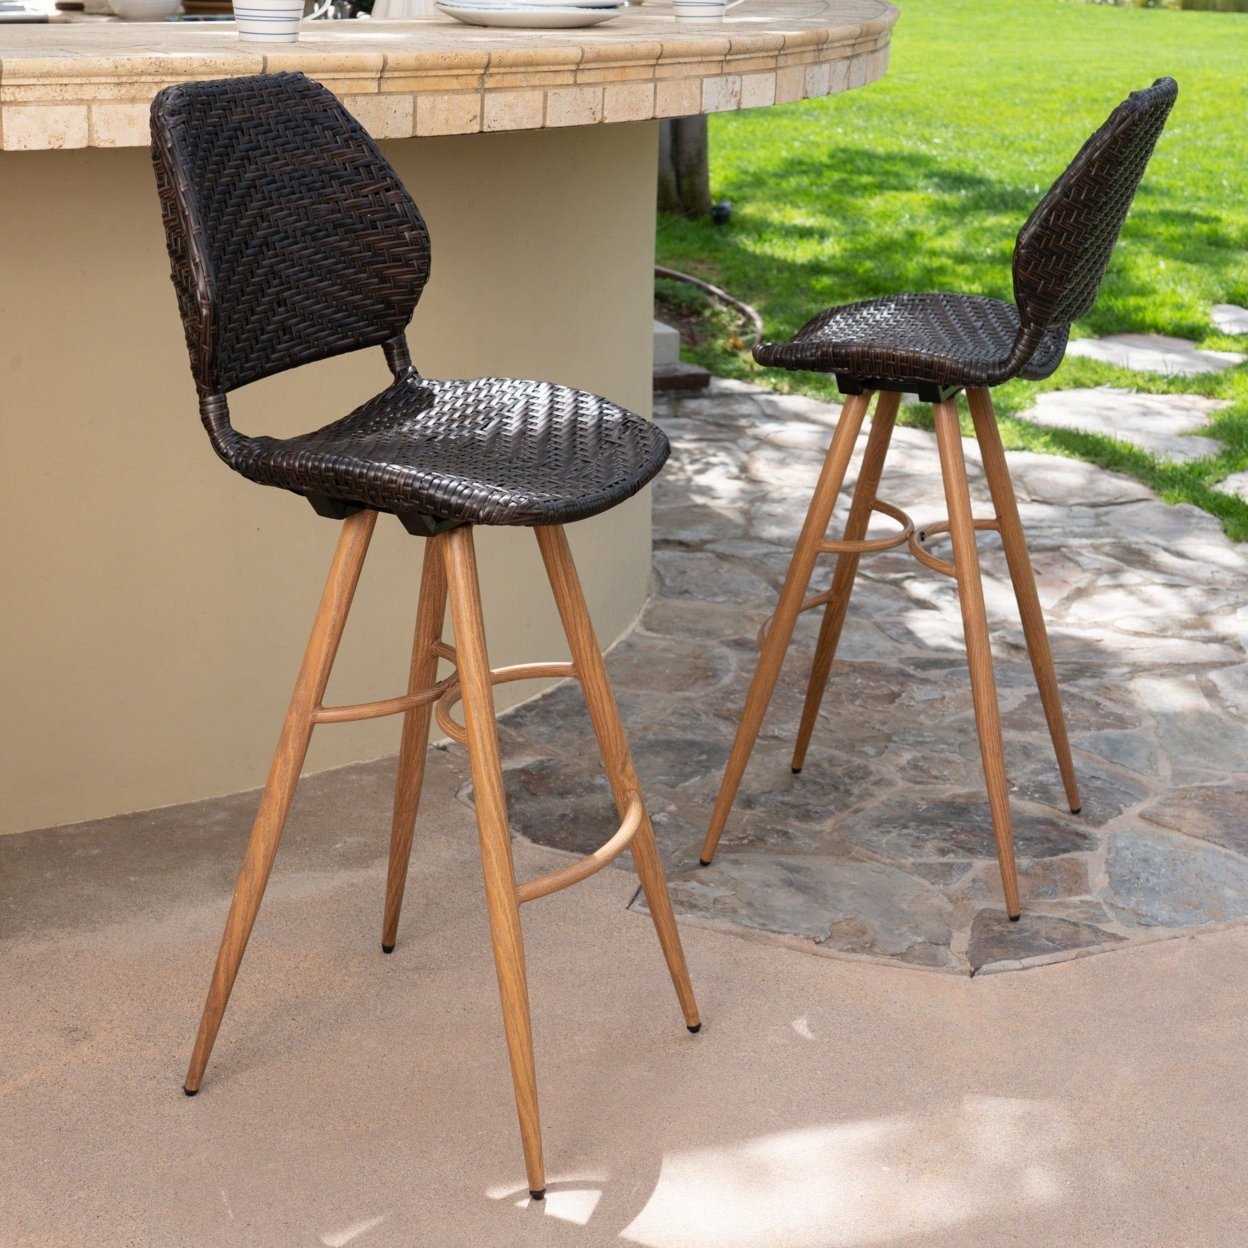 Amaya Outdoor Multi-brown Wicker Barstools With Brown Wood Finish Metal Leg - Brown, Set Of 4